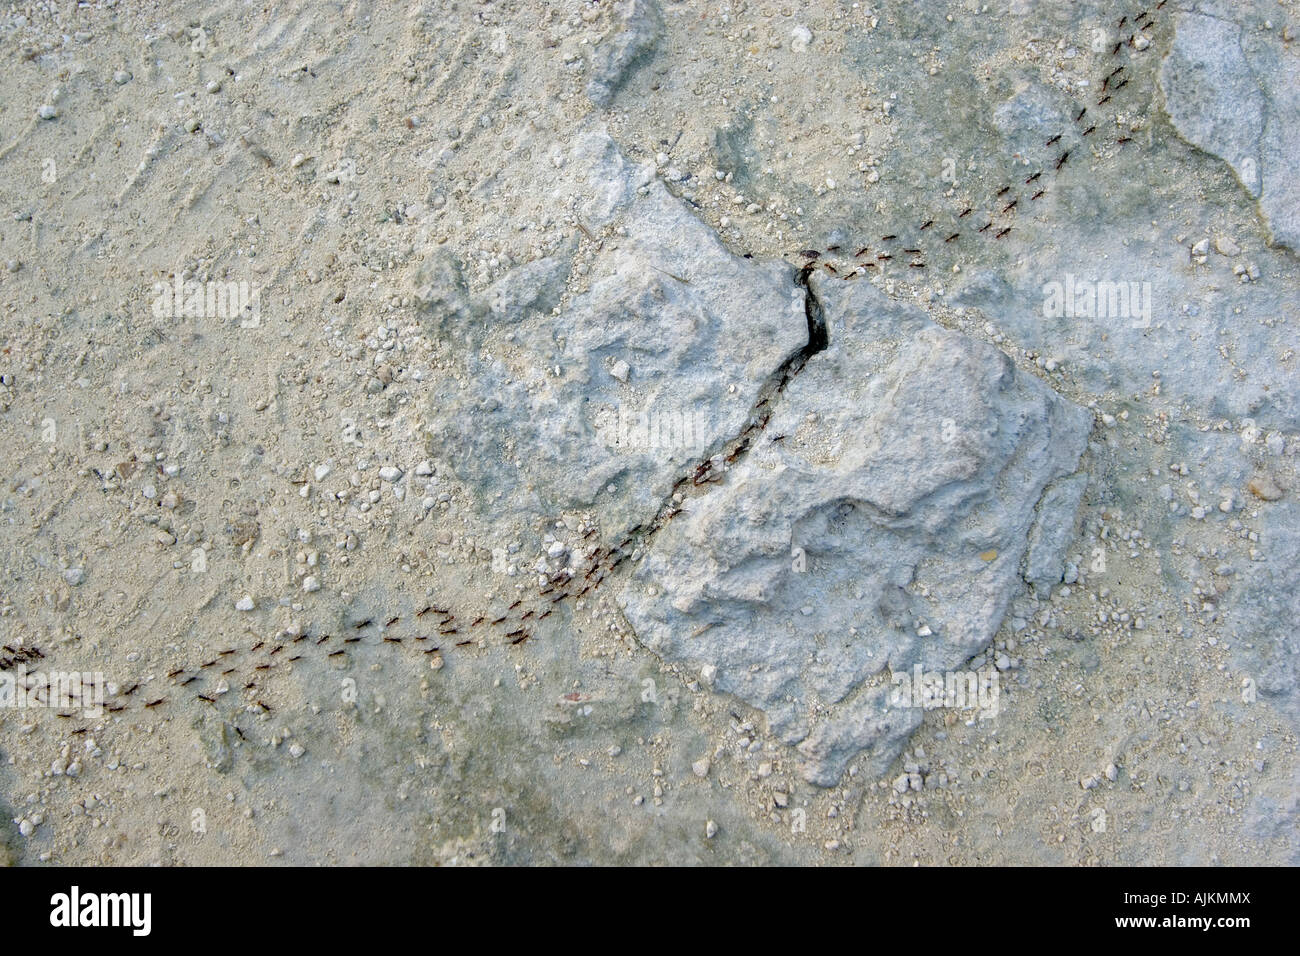 An ant colony progressing on a track (Yucatán- Mexico). Colonie de foumis (Formica sp) traversant un chemin (Yucatán - Mexique). Stock Photo